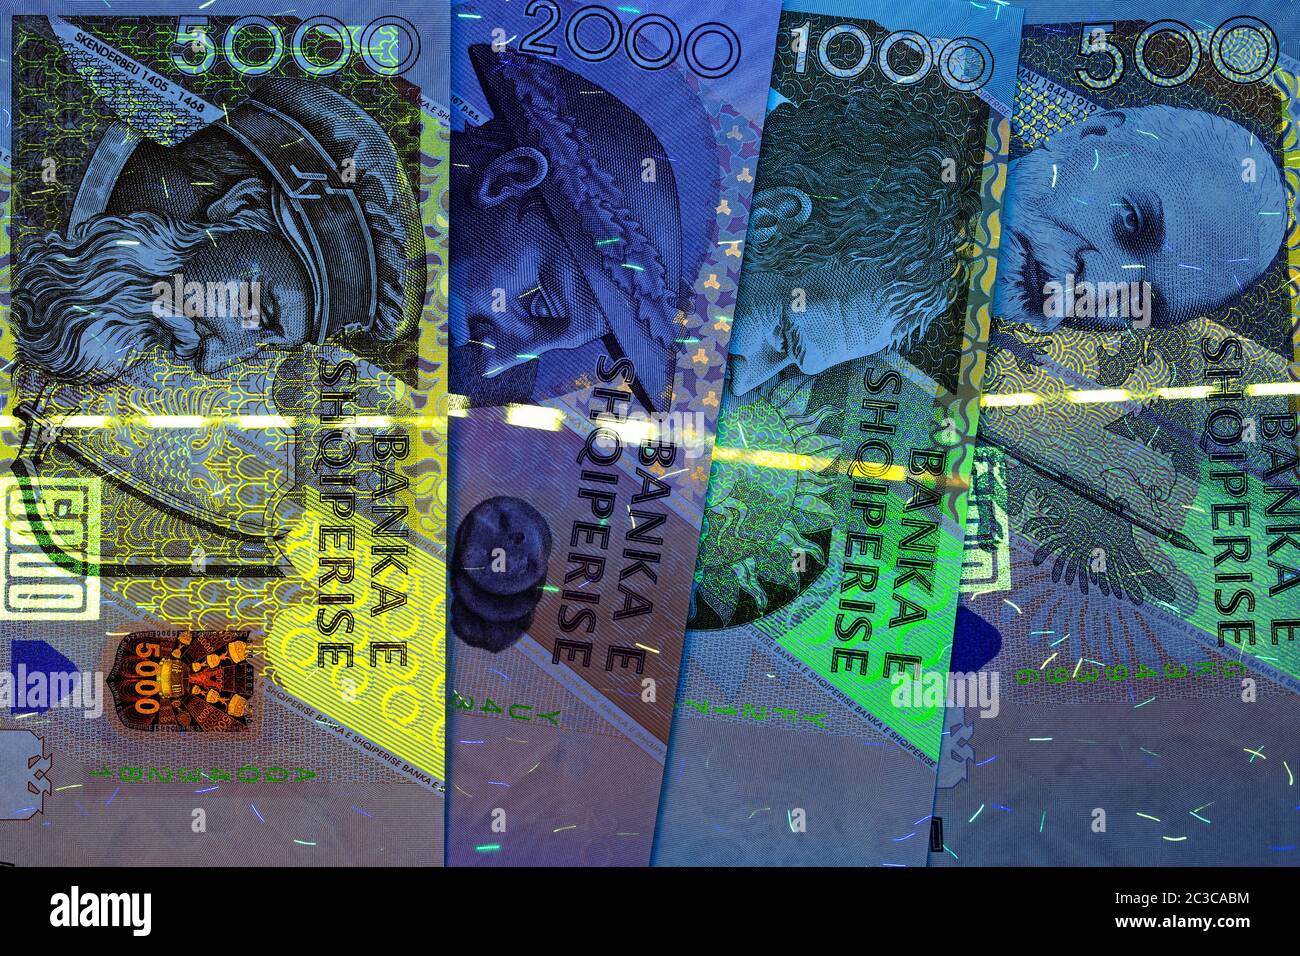 Albanisches Geld in UV-Strahlen Stockfoto